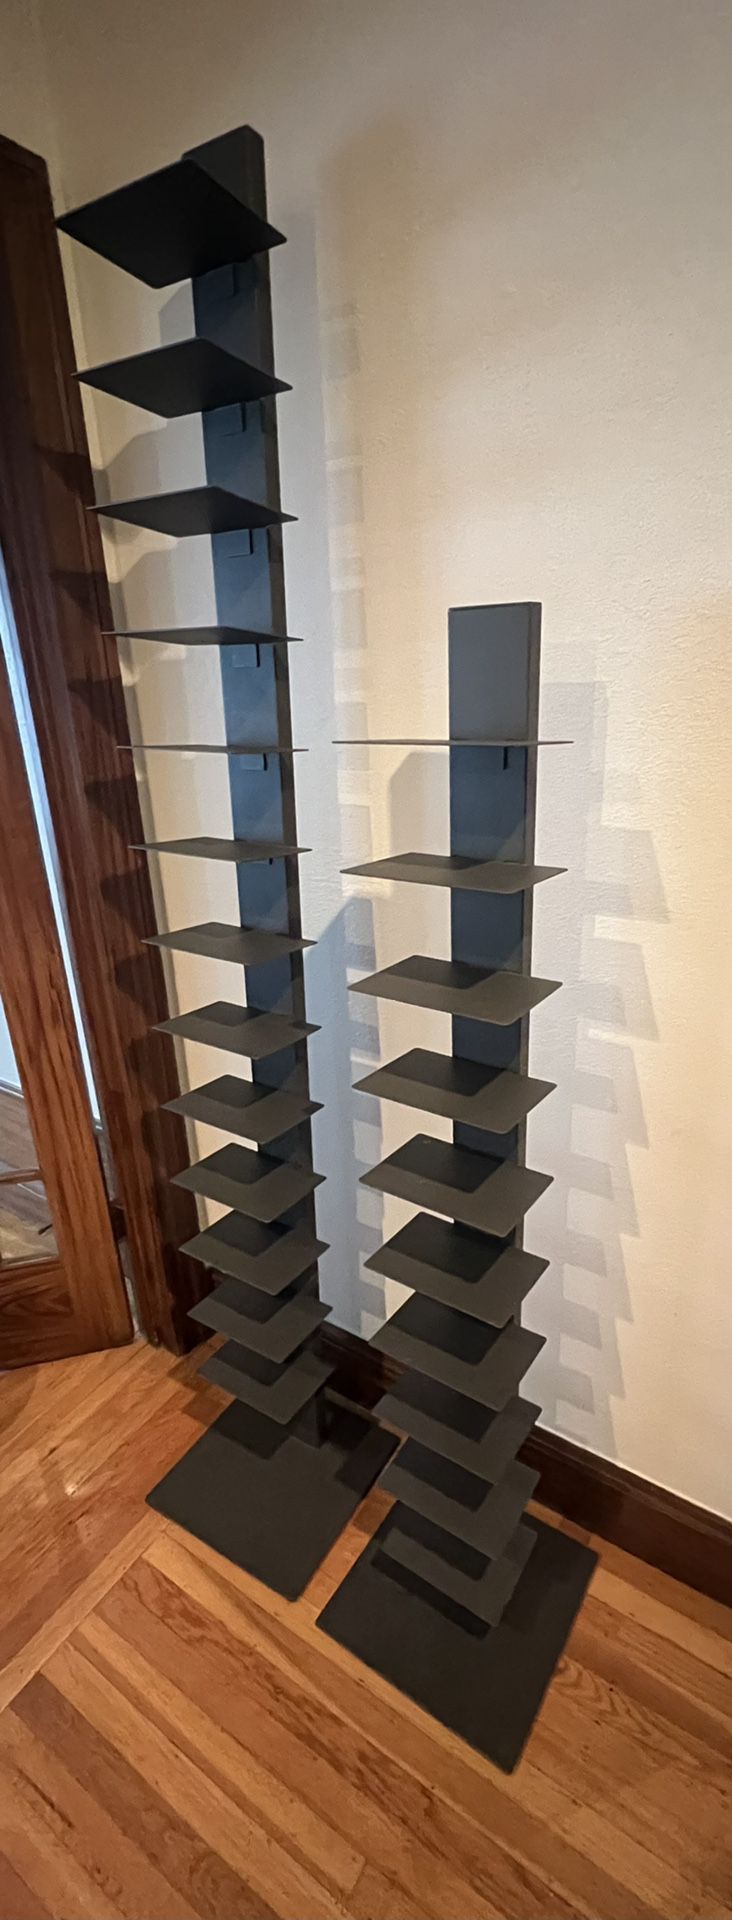 Design Within Reach Tower Bookshelf 